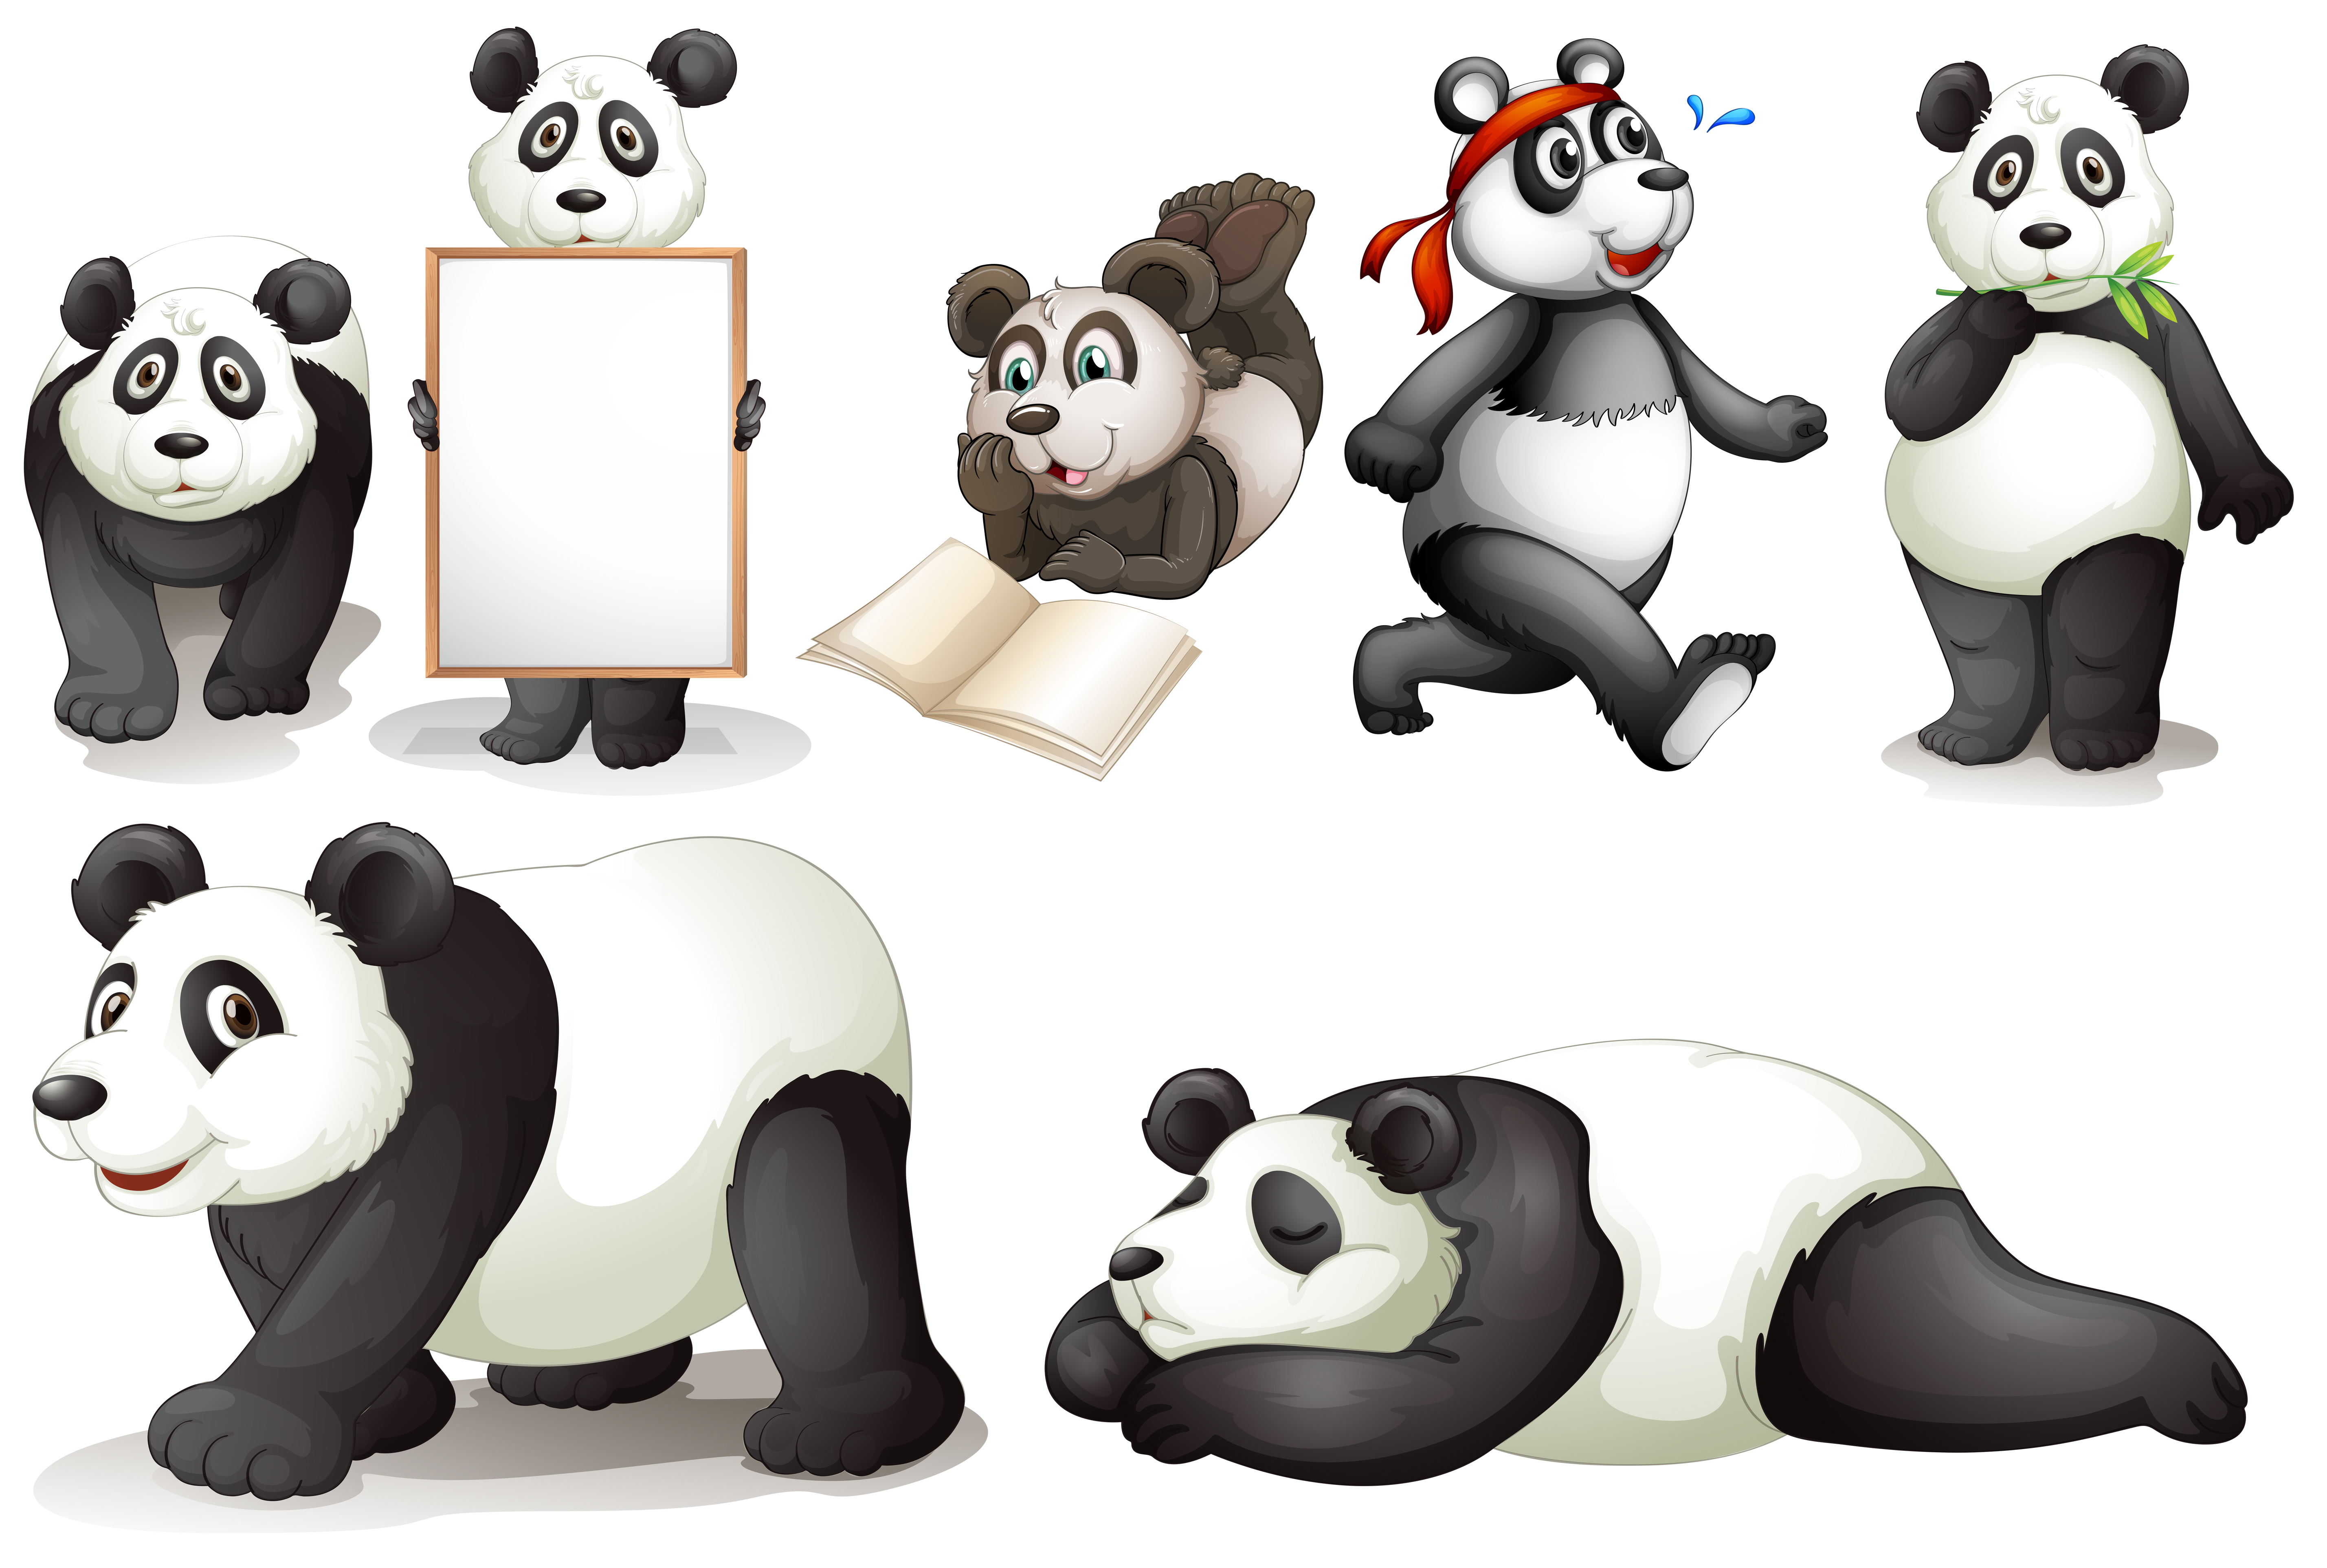 Seven Segment Clip Art Is Free Clipart Panda Free Clipart Images ...